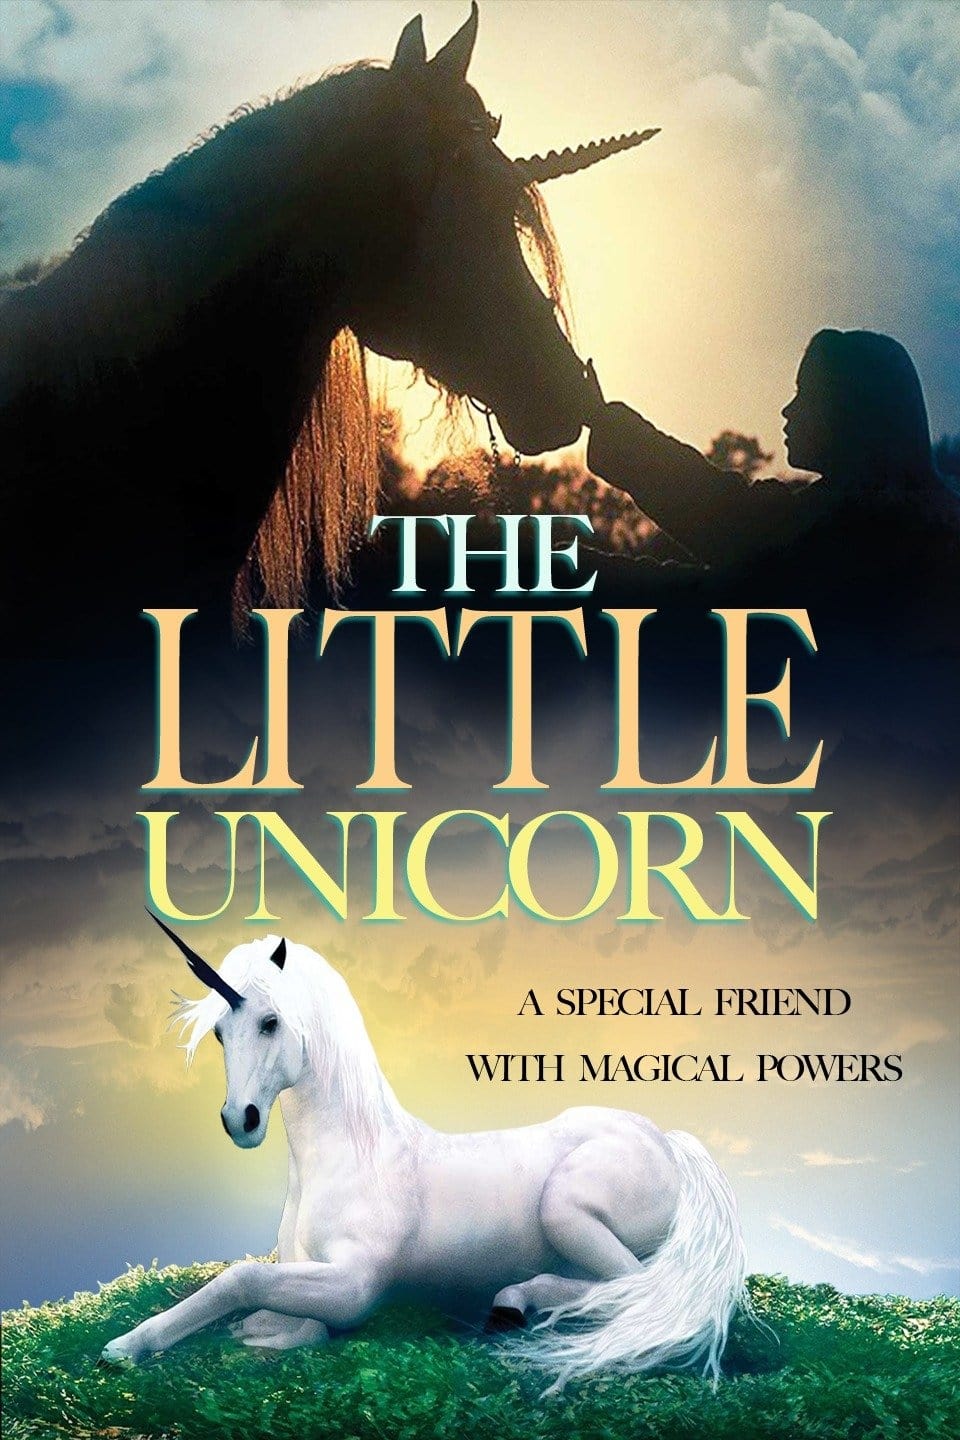 The Little Unicorn